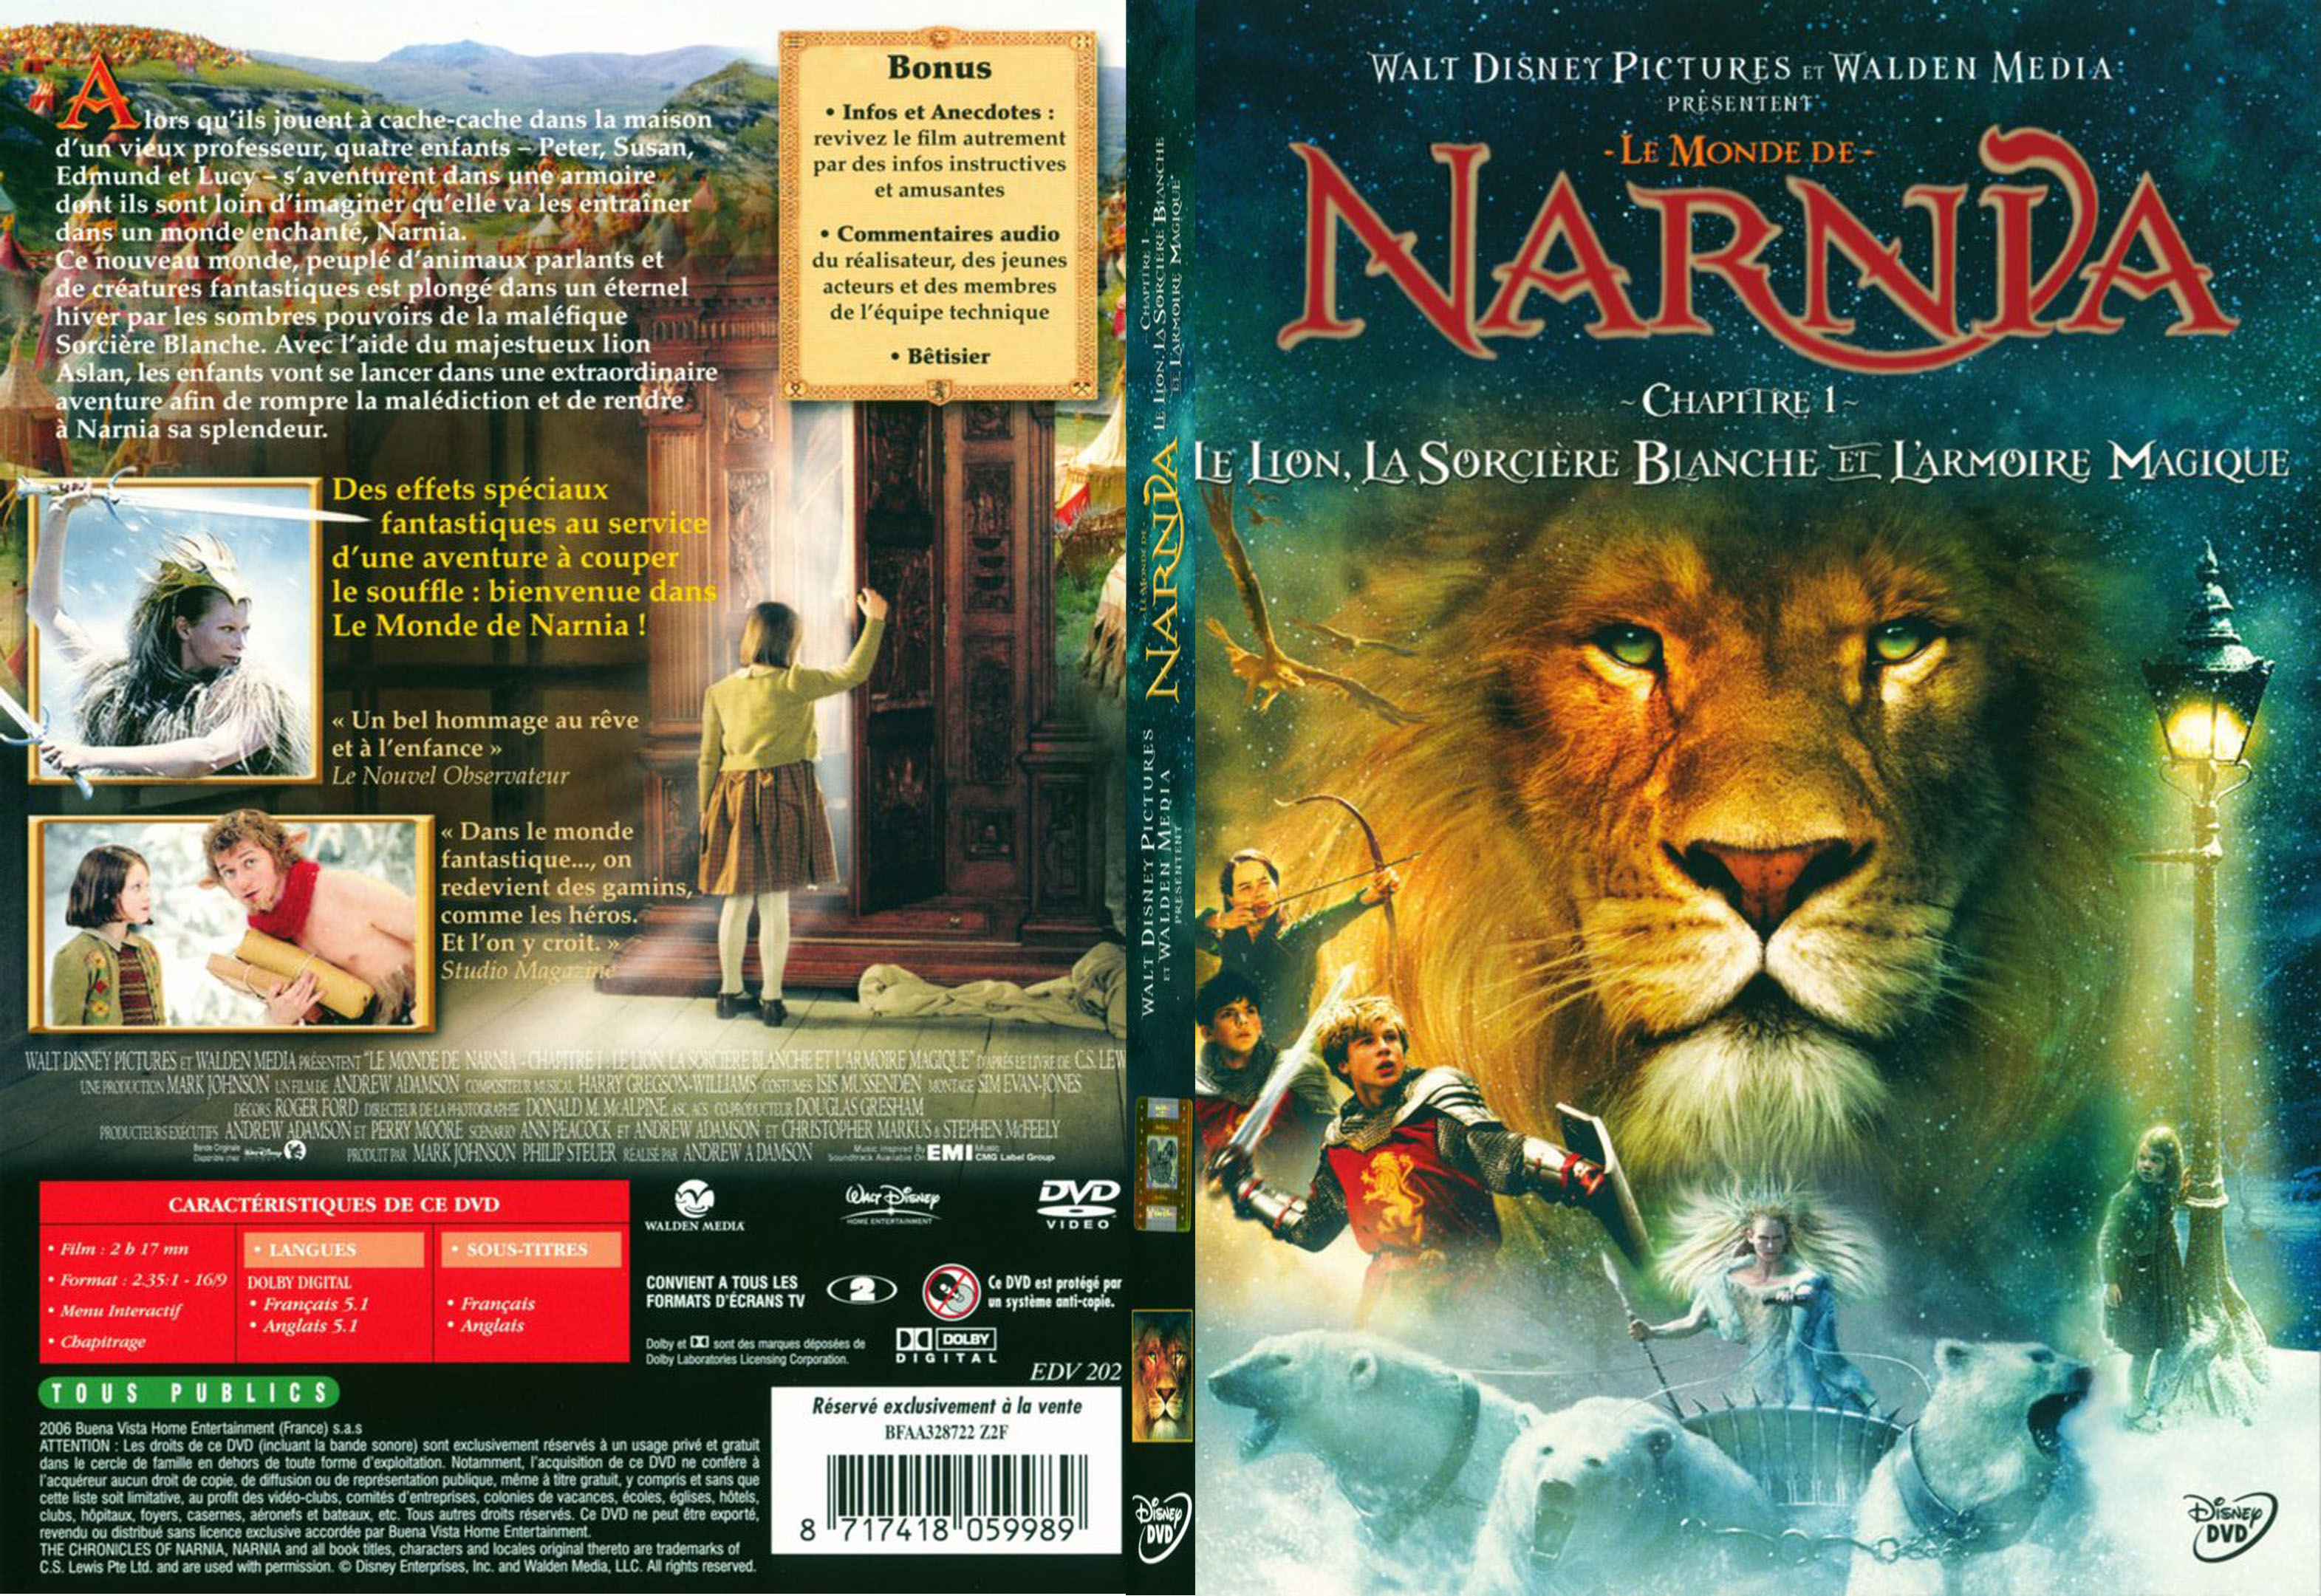 Jaquette DVD Le monde de narnia chapitre 1 - SLIM v2